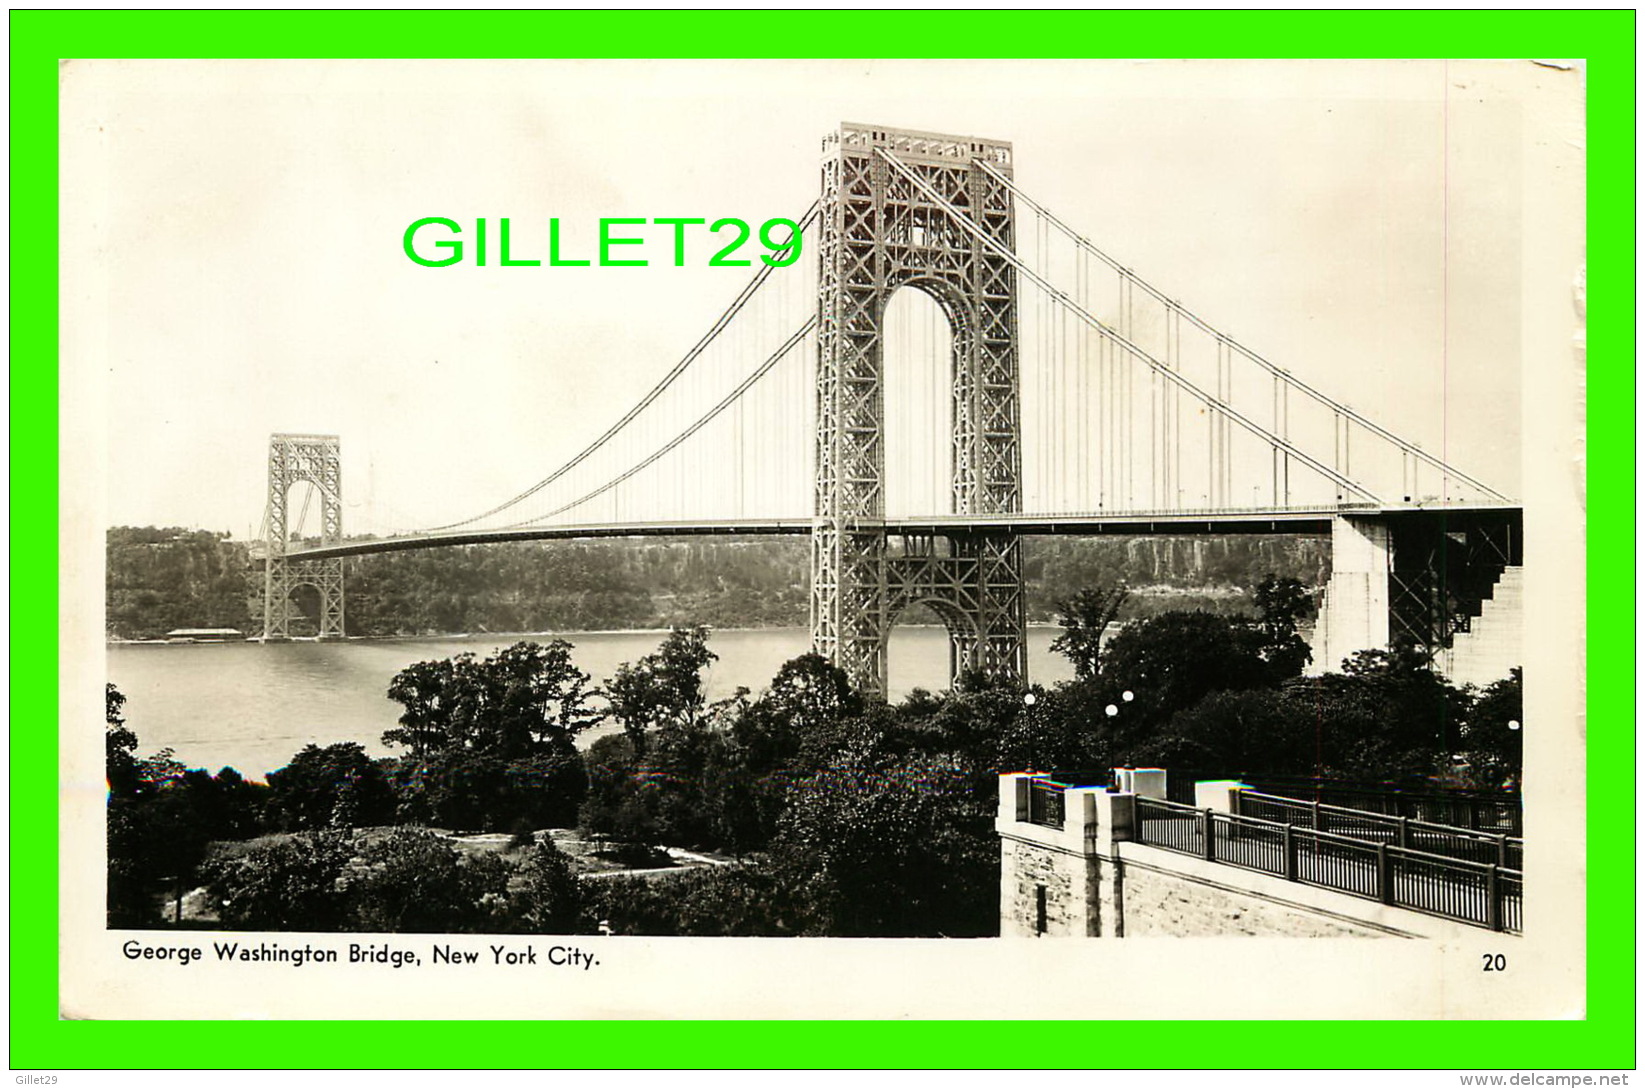 NEW YORK CITY, NY - GEORGE WASHINGTON BRIDGE -  ALFRED MAINZER - ACTUAL PHOTOGRAPH - - Bridges & Tunnels